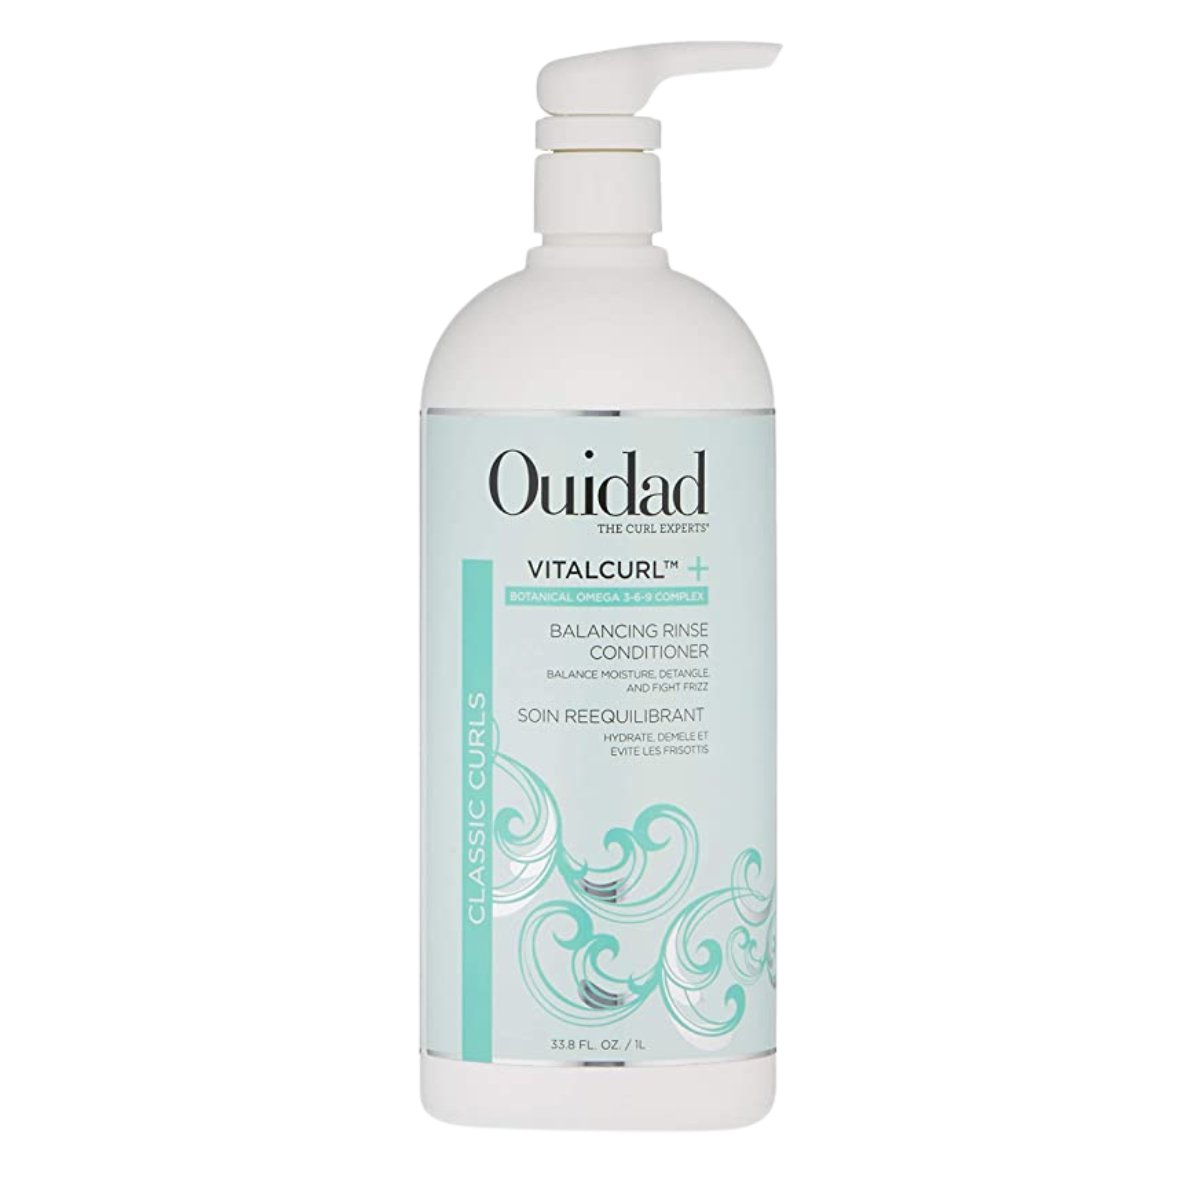 Ouidad VitalCurl+ Balancing Rinse Conditioner 33.8 oz - SkincareEssentials